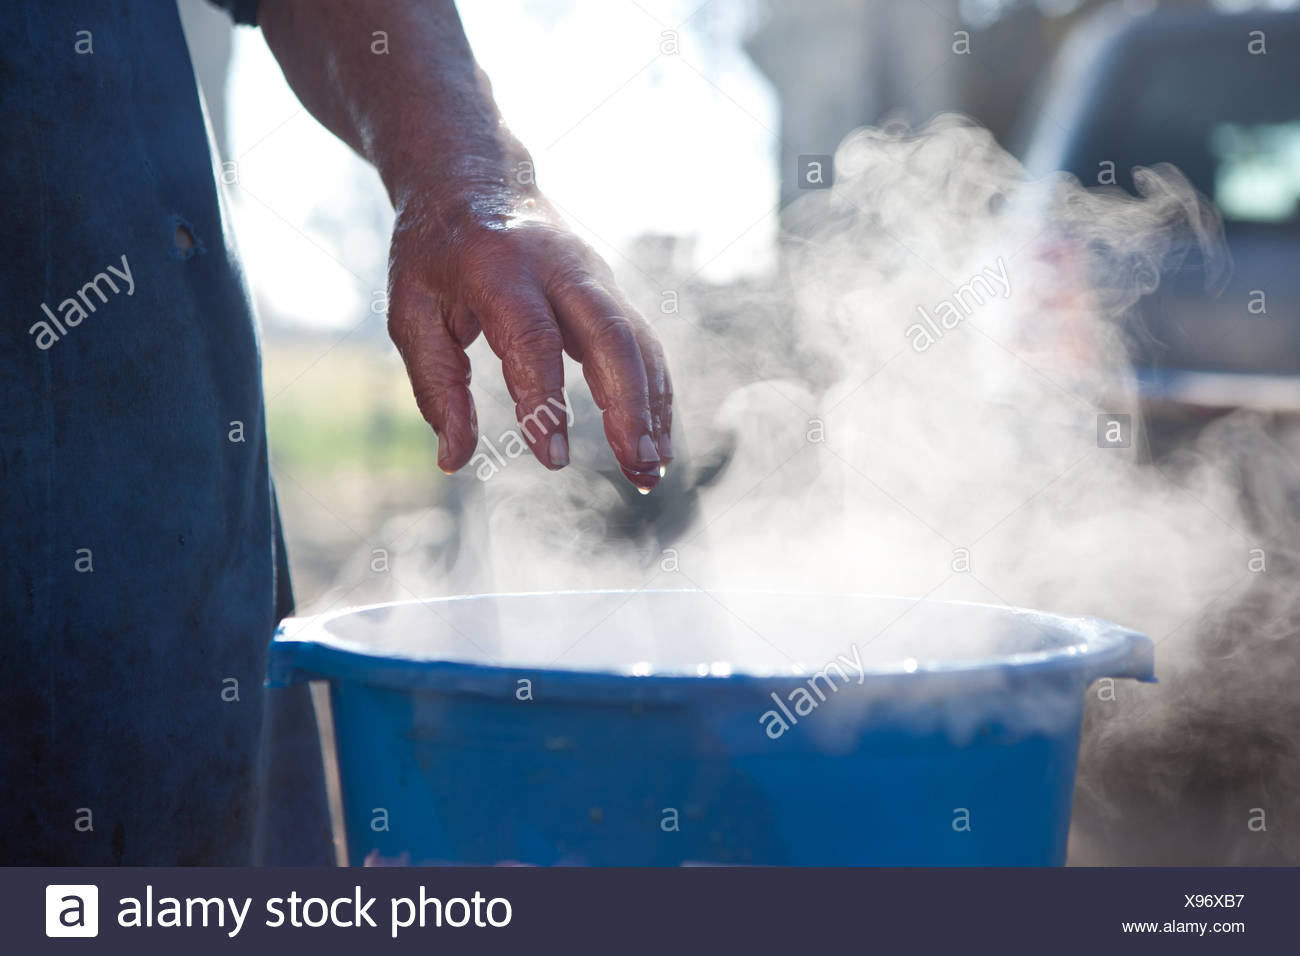 Hot water bucket Stock Photo: 281050203 - Alamy